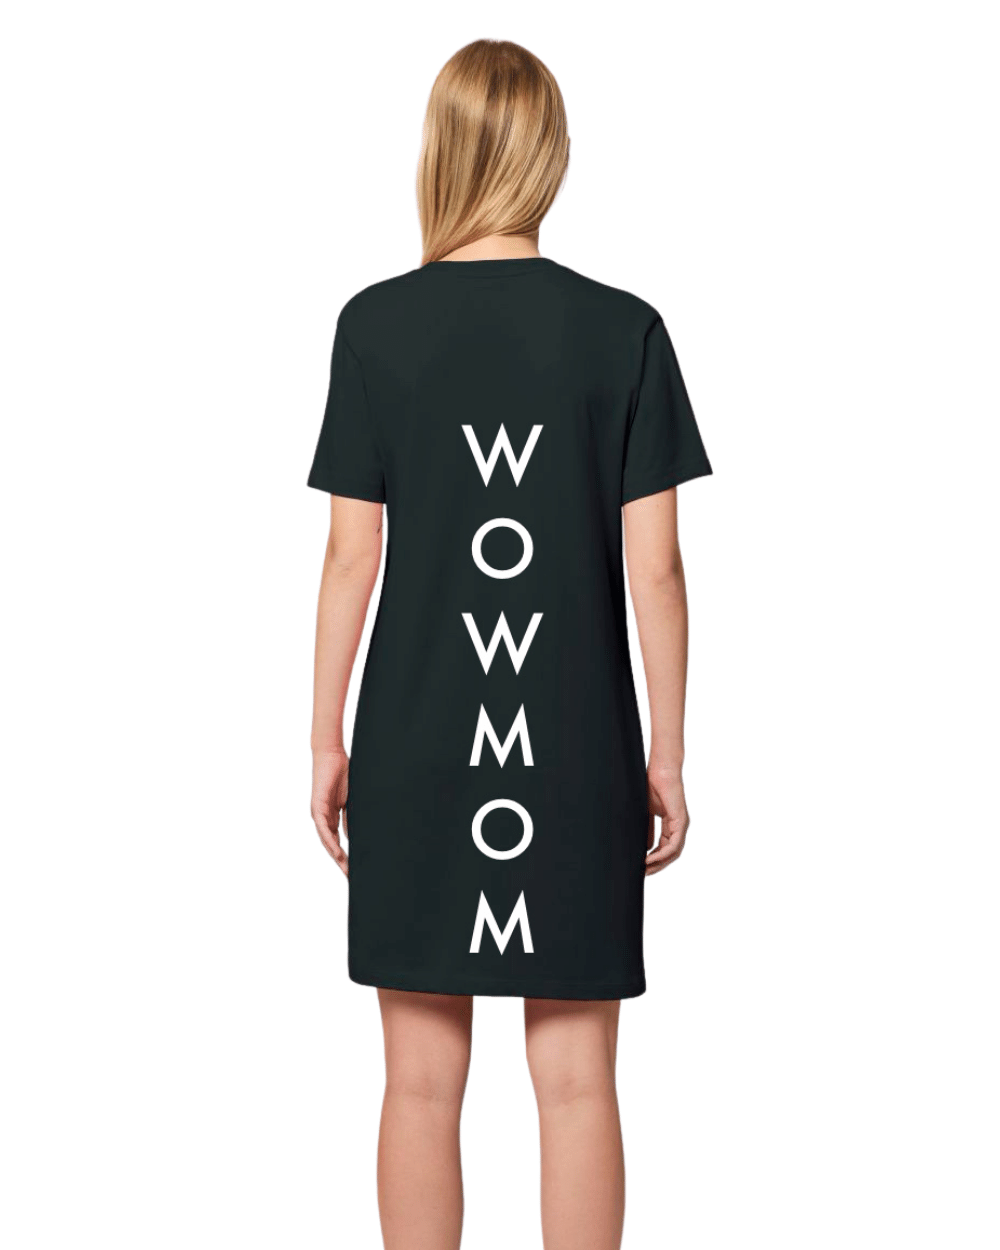 Rochia tricou WoW MoM Negru mamaboutique.ro imagine 2022 protejamcopilaria.ro